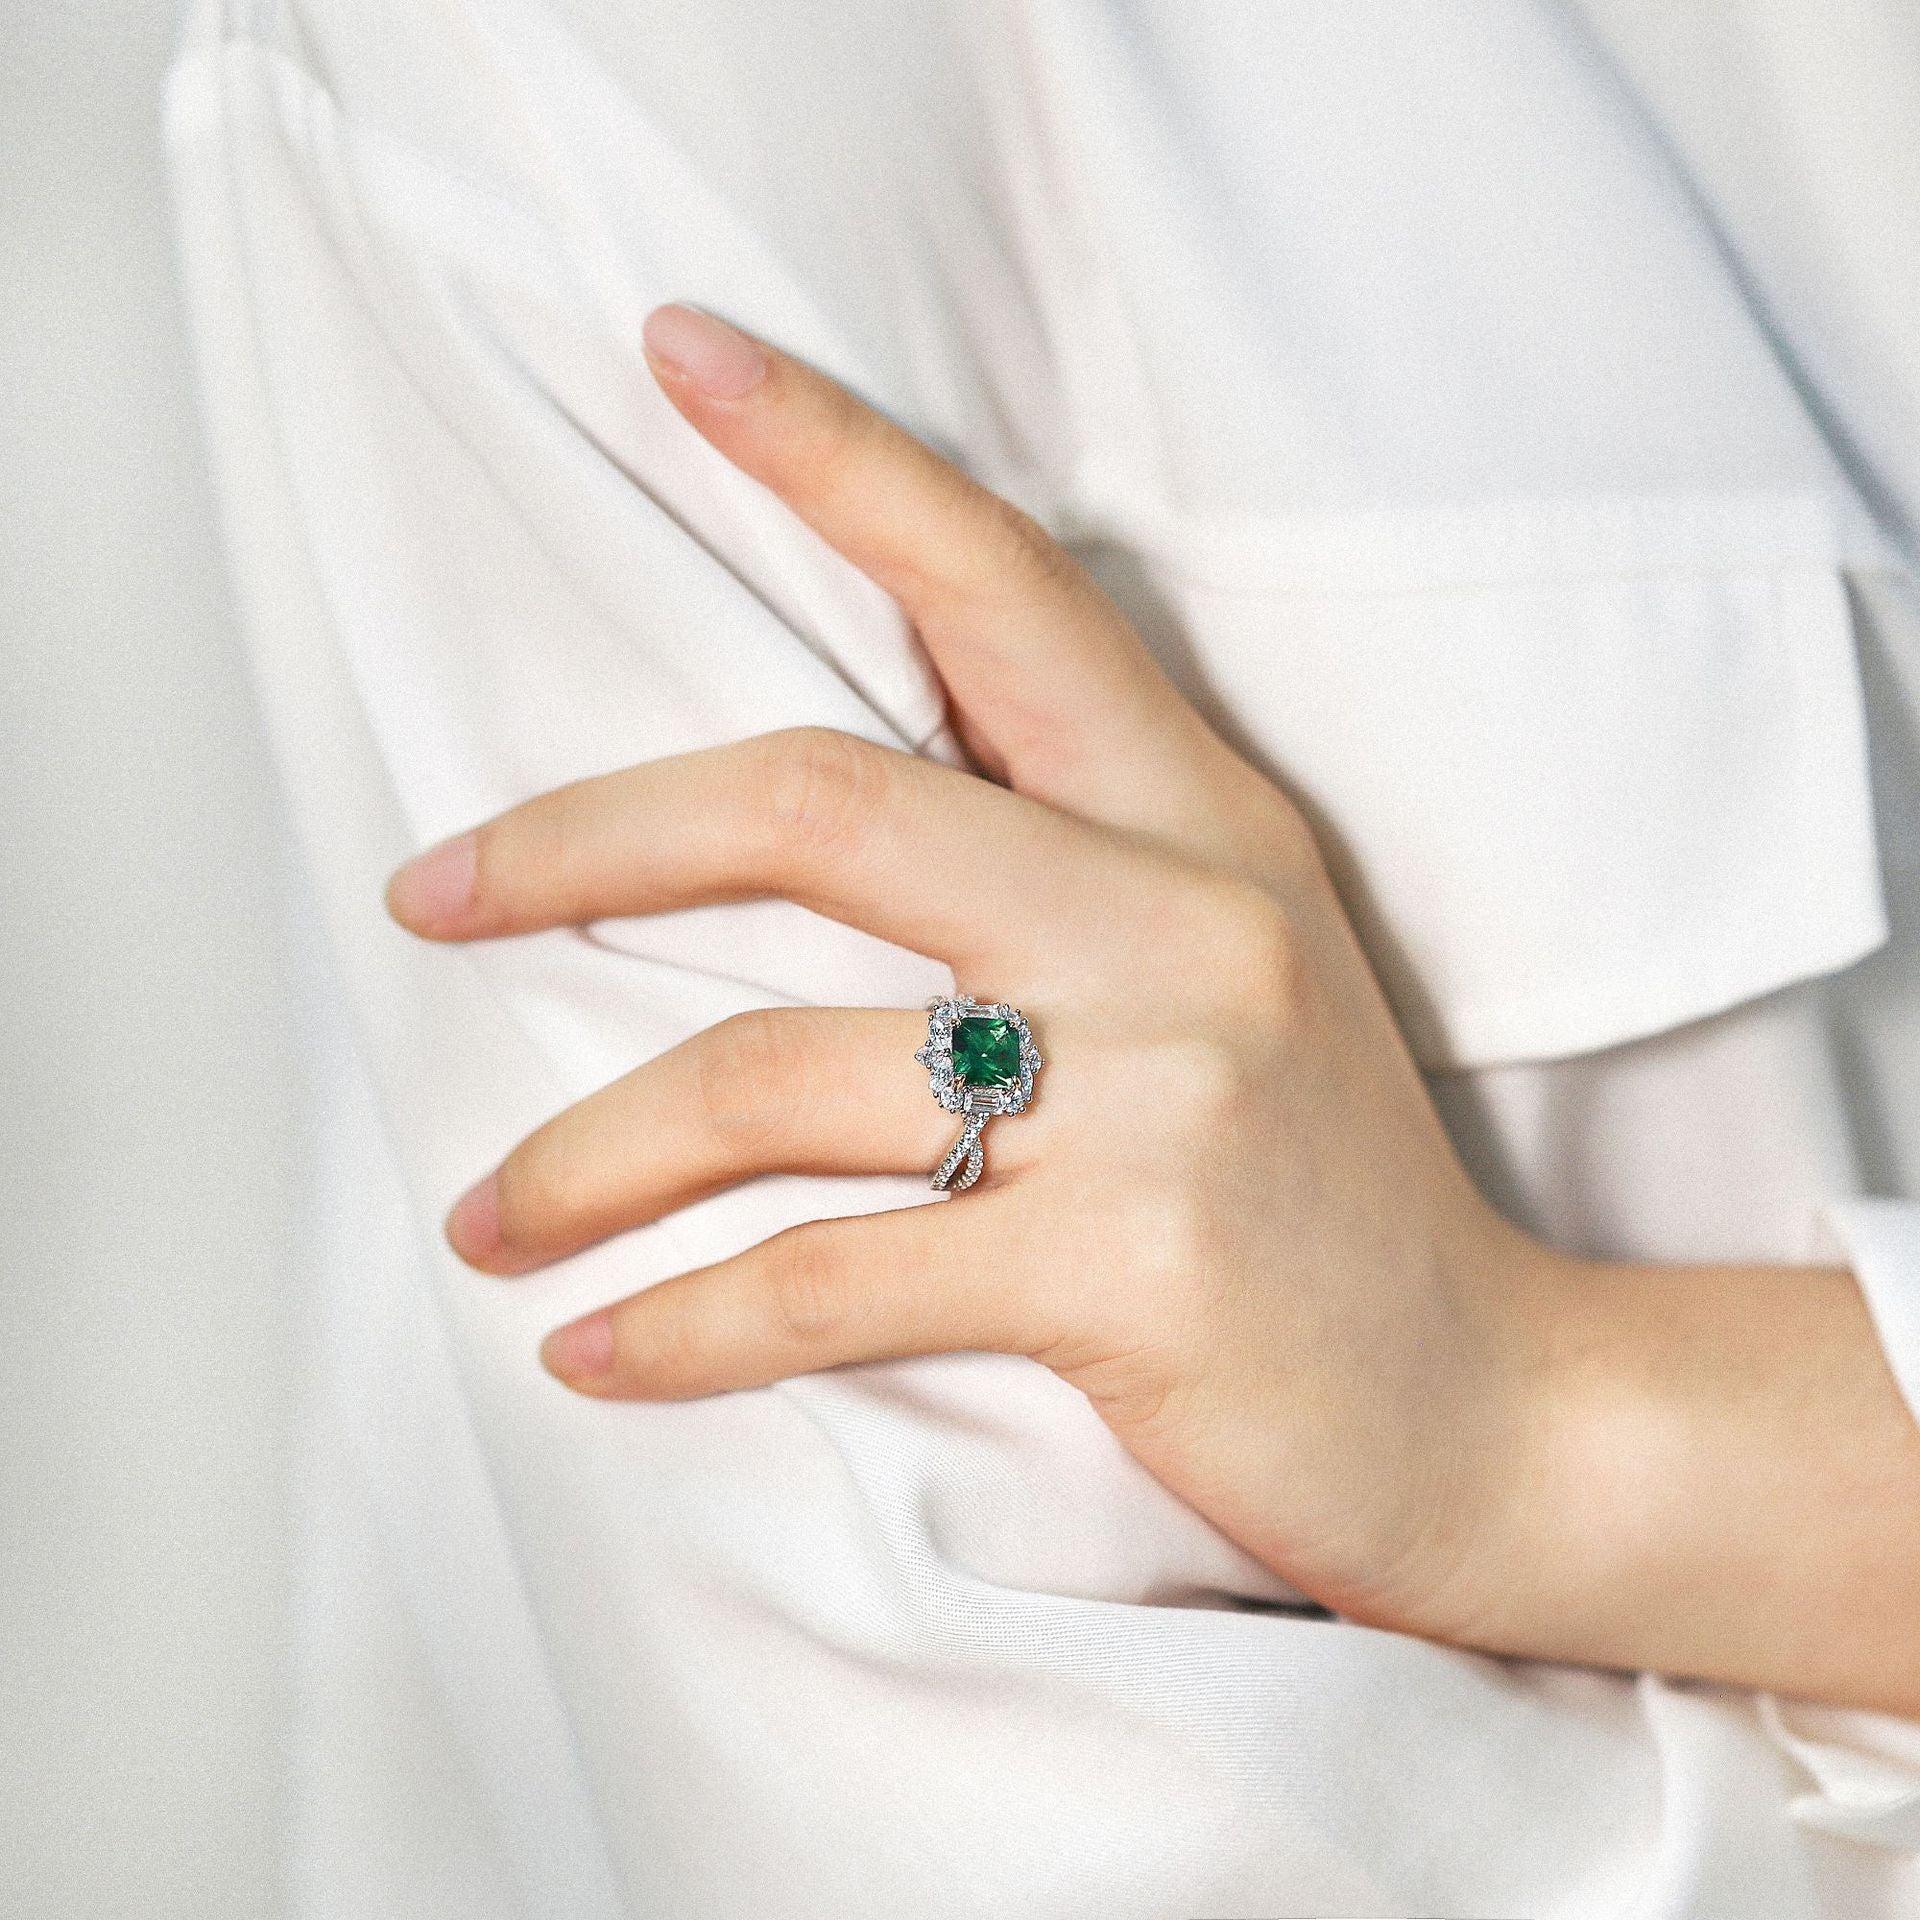 Antique Art Deco Emerald Ring - HERS